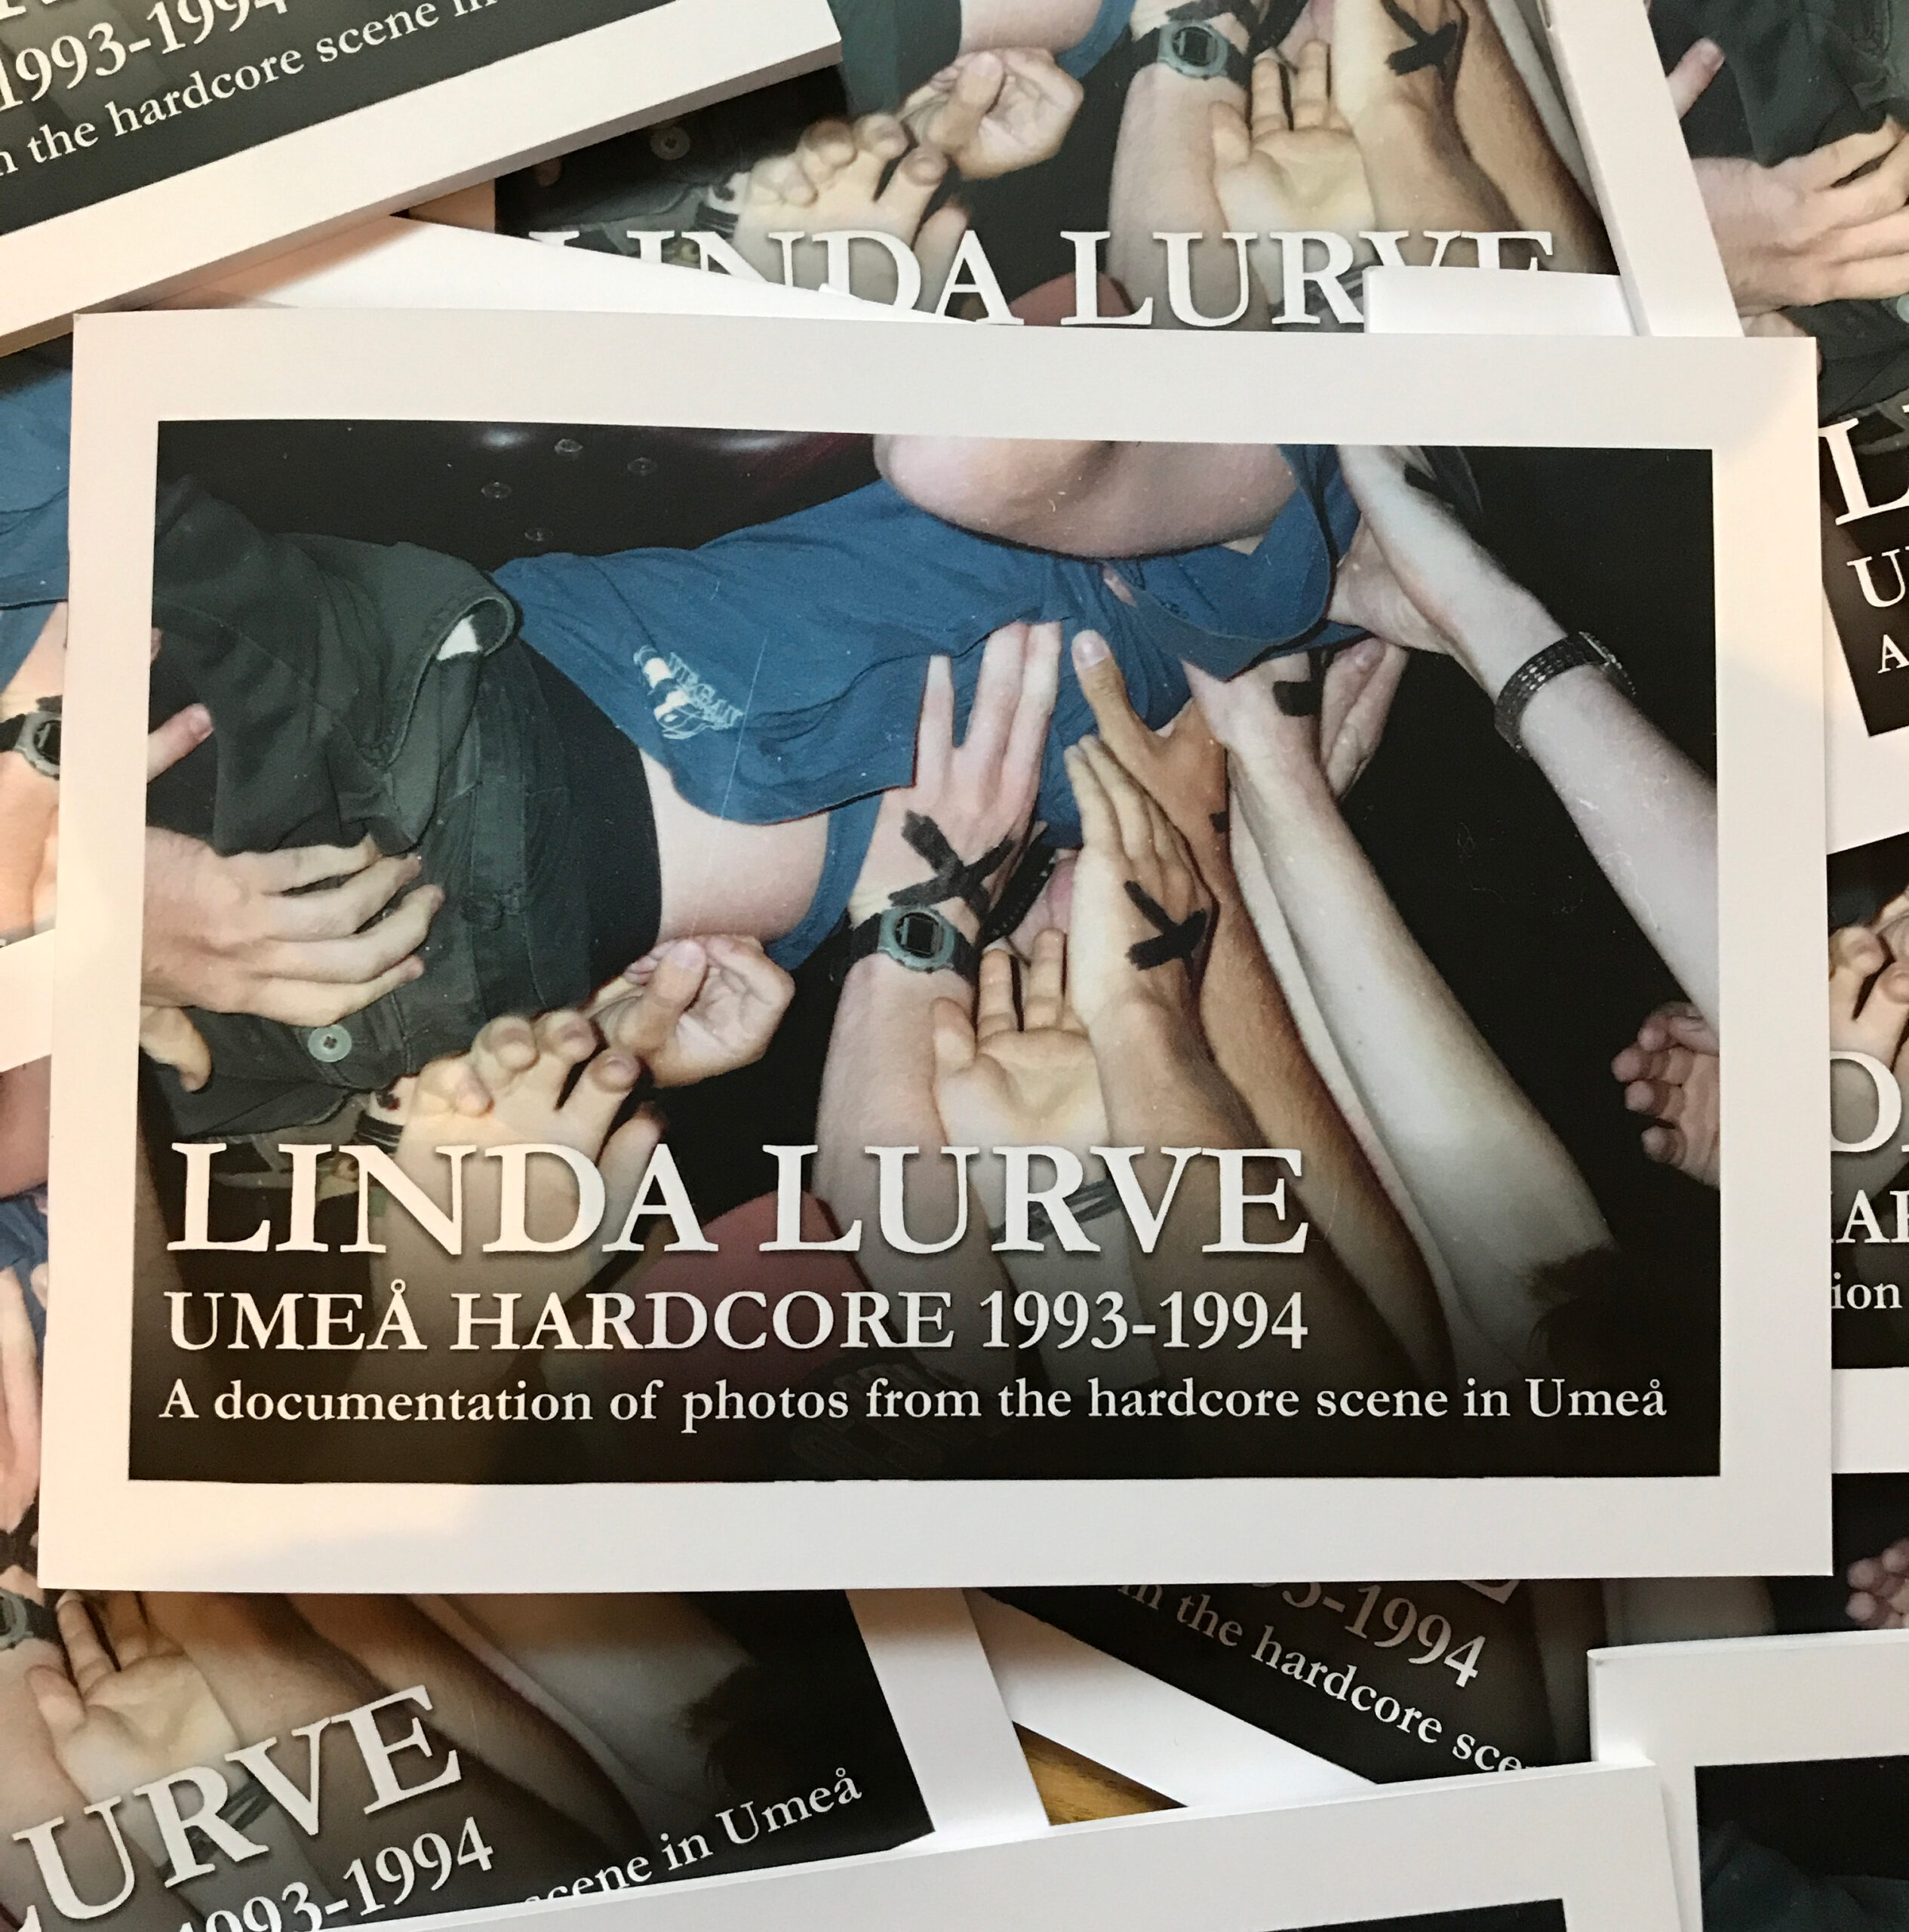 Linda Lurve – Umeå Hardcore 93-94 (photo book)